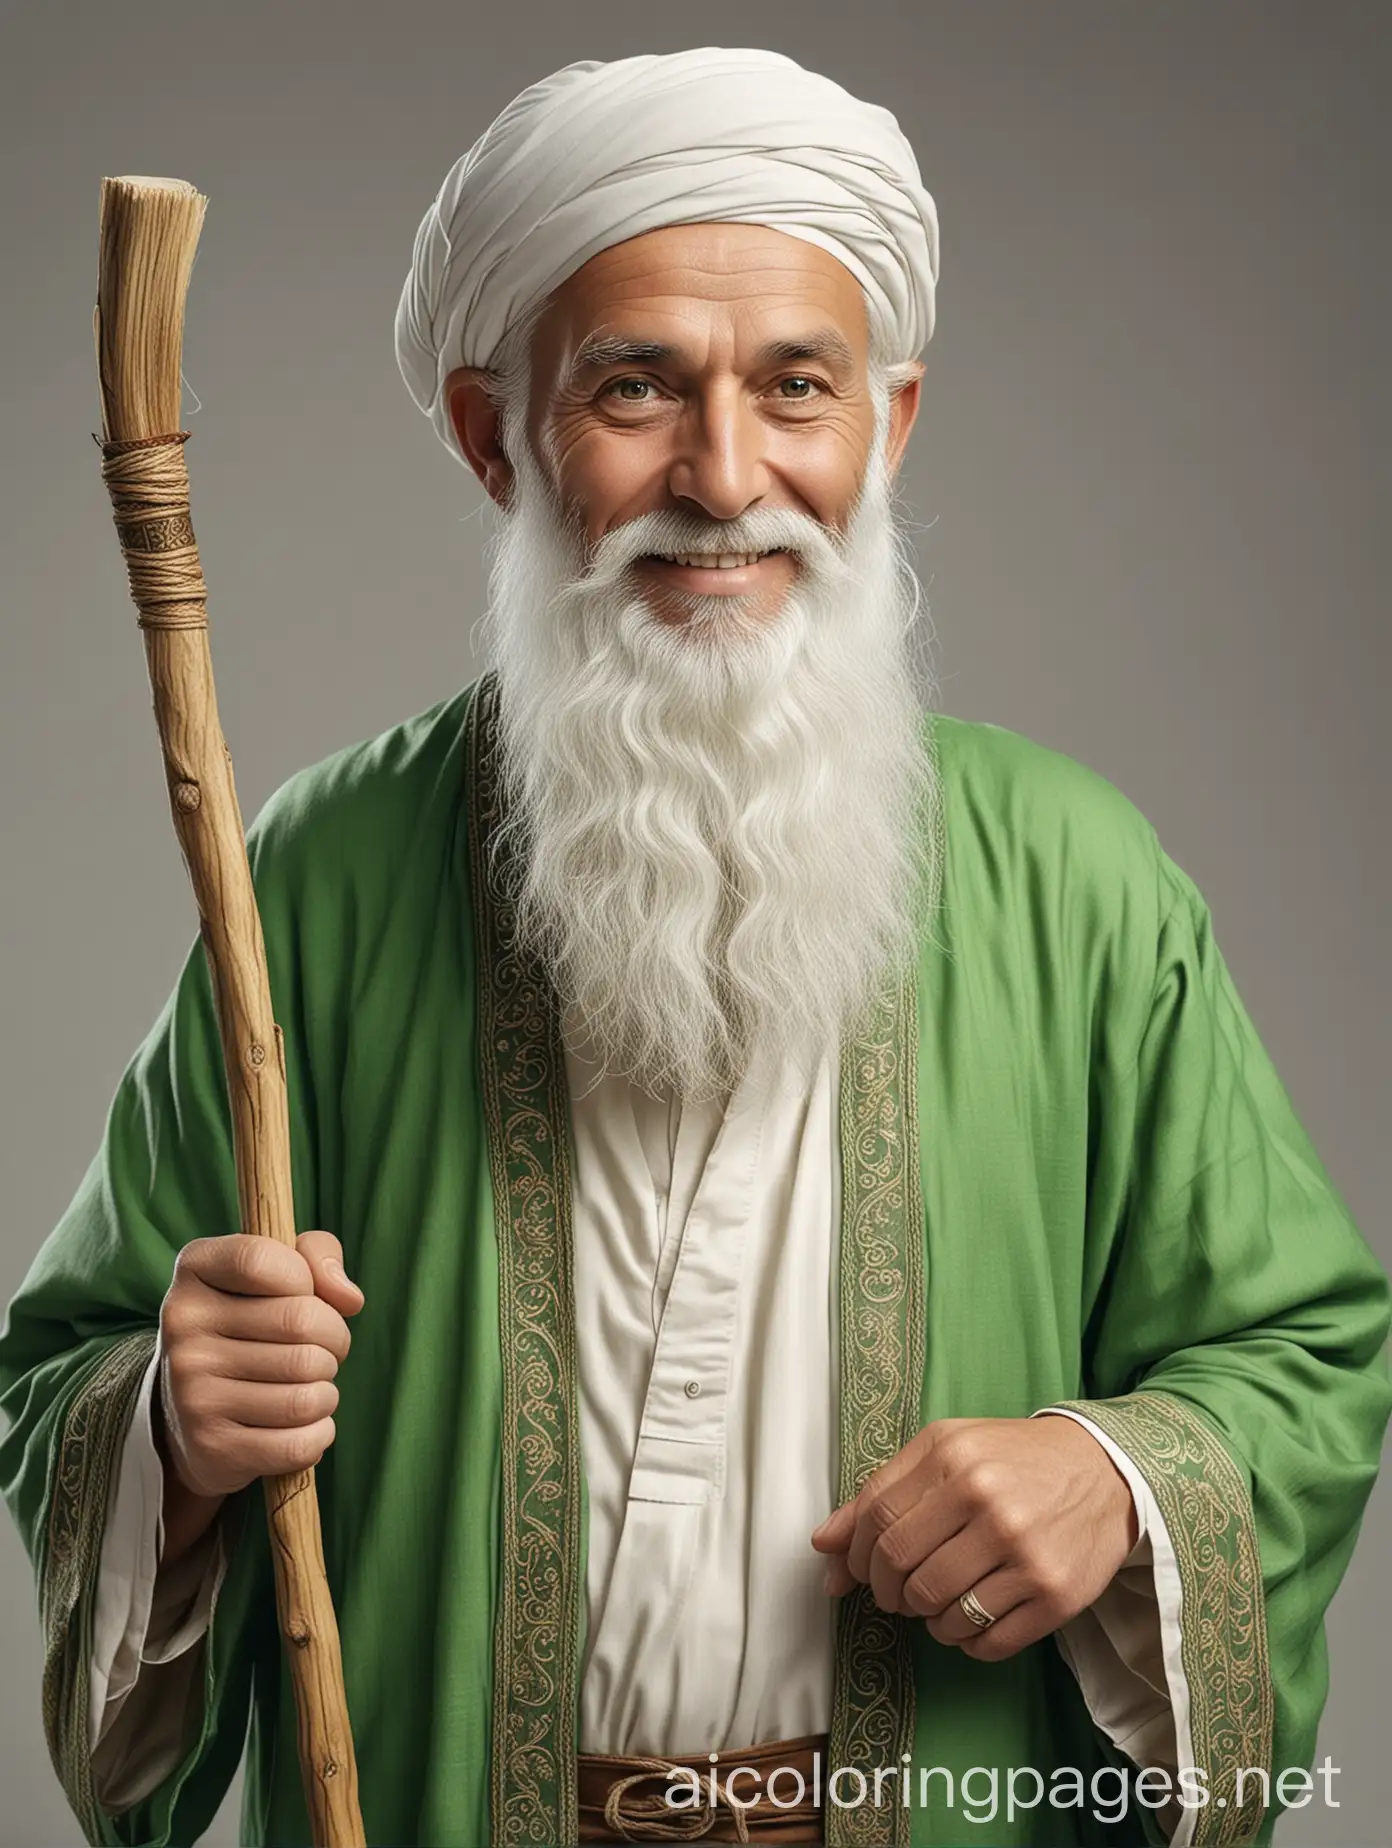 Islamic-Era-Sage-with-White-Beard-and-Green-Attire-Vintage-4K-Portrait